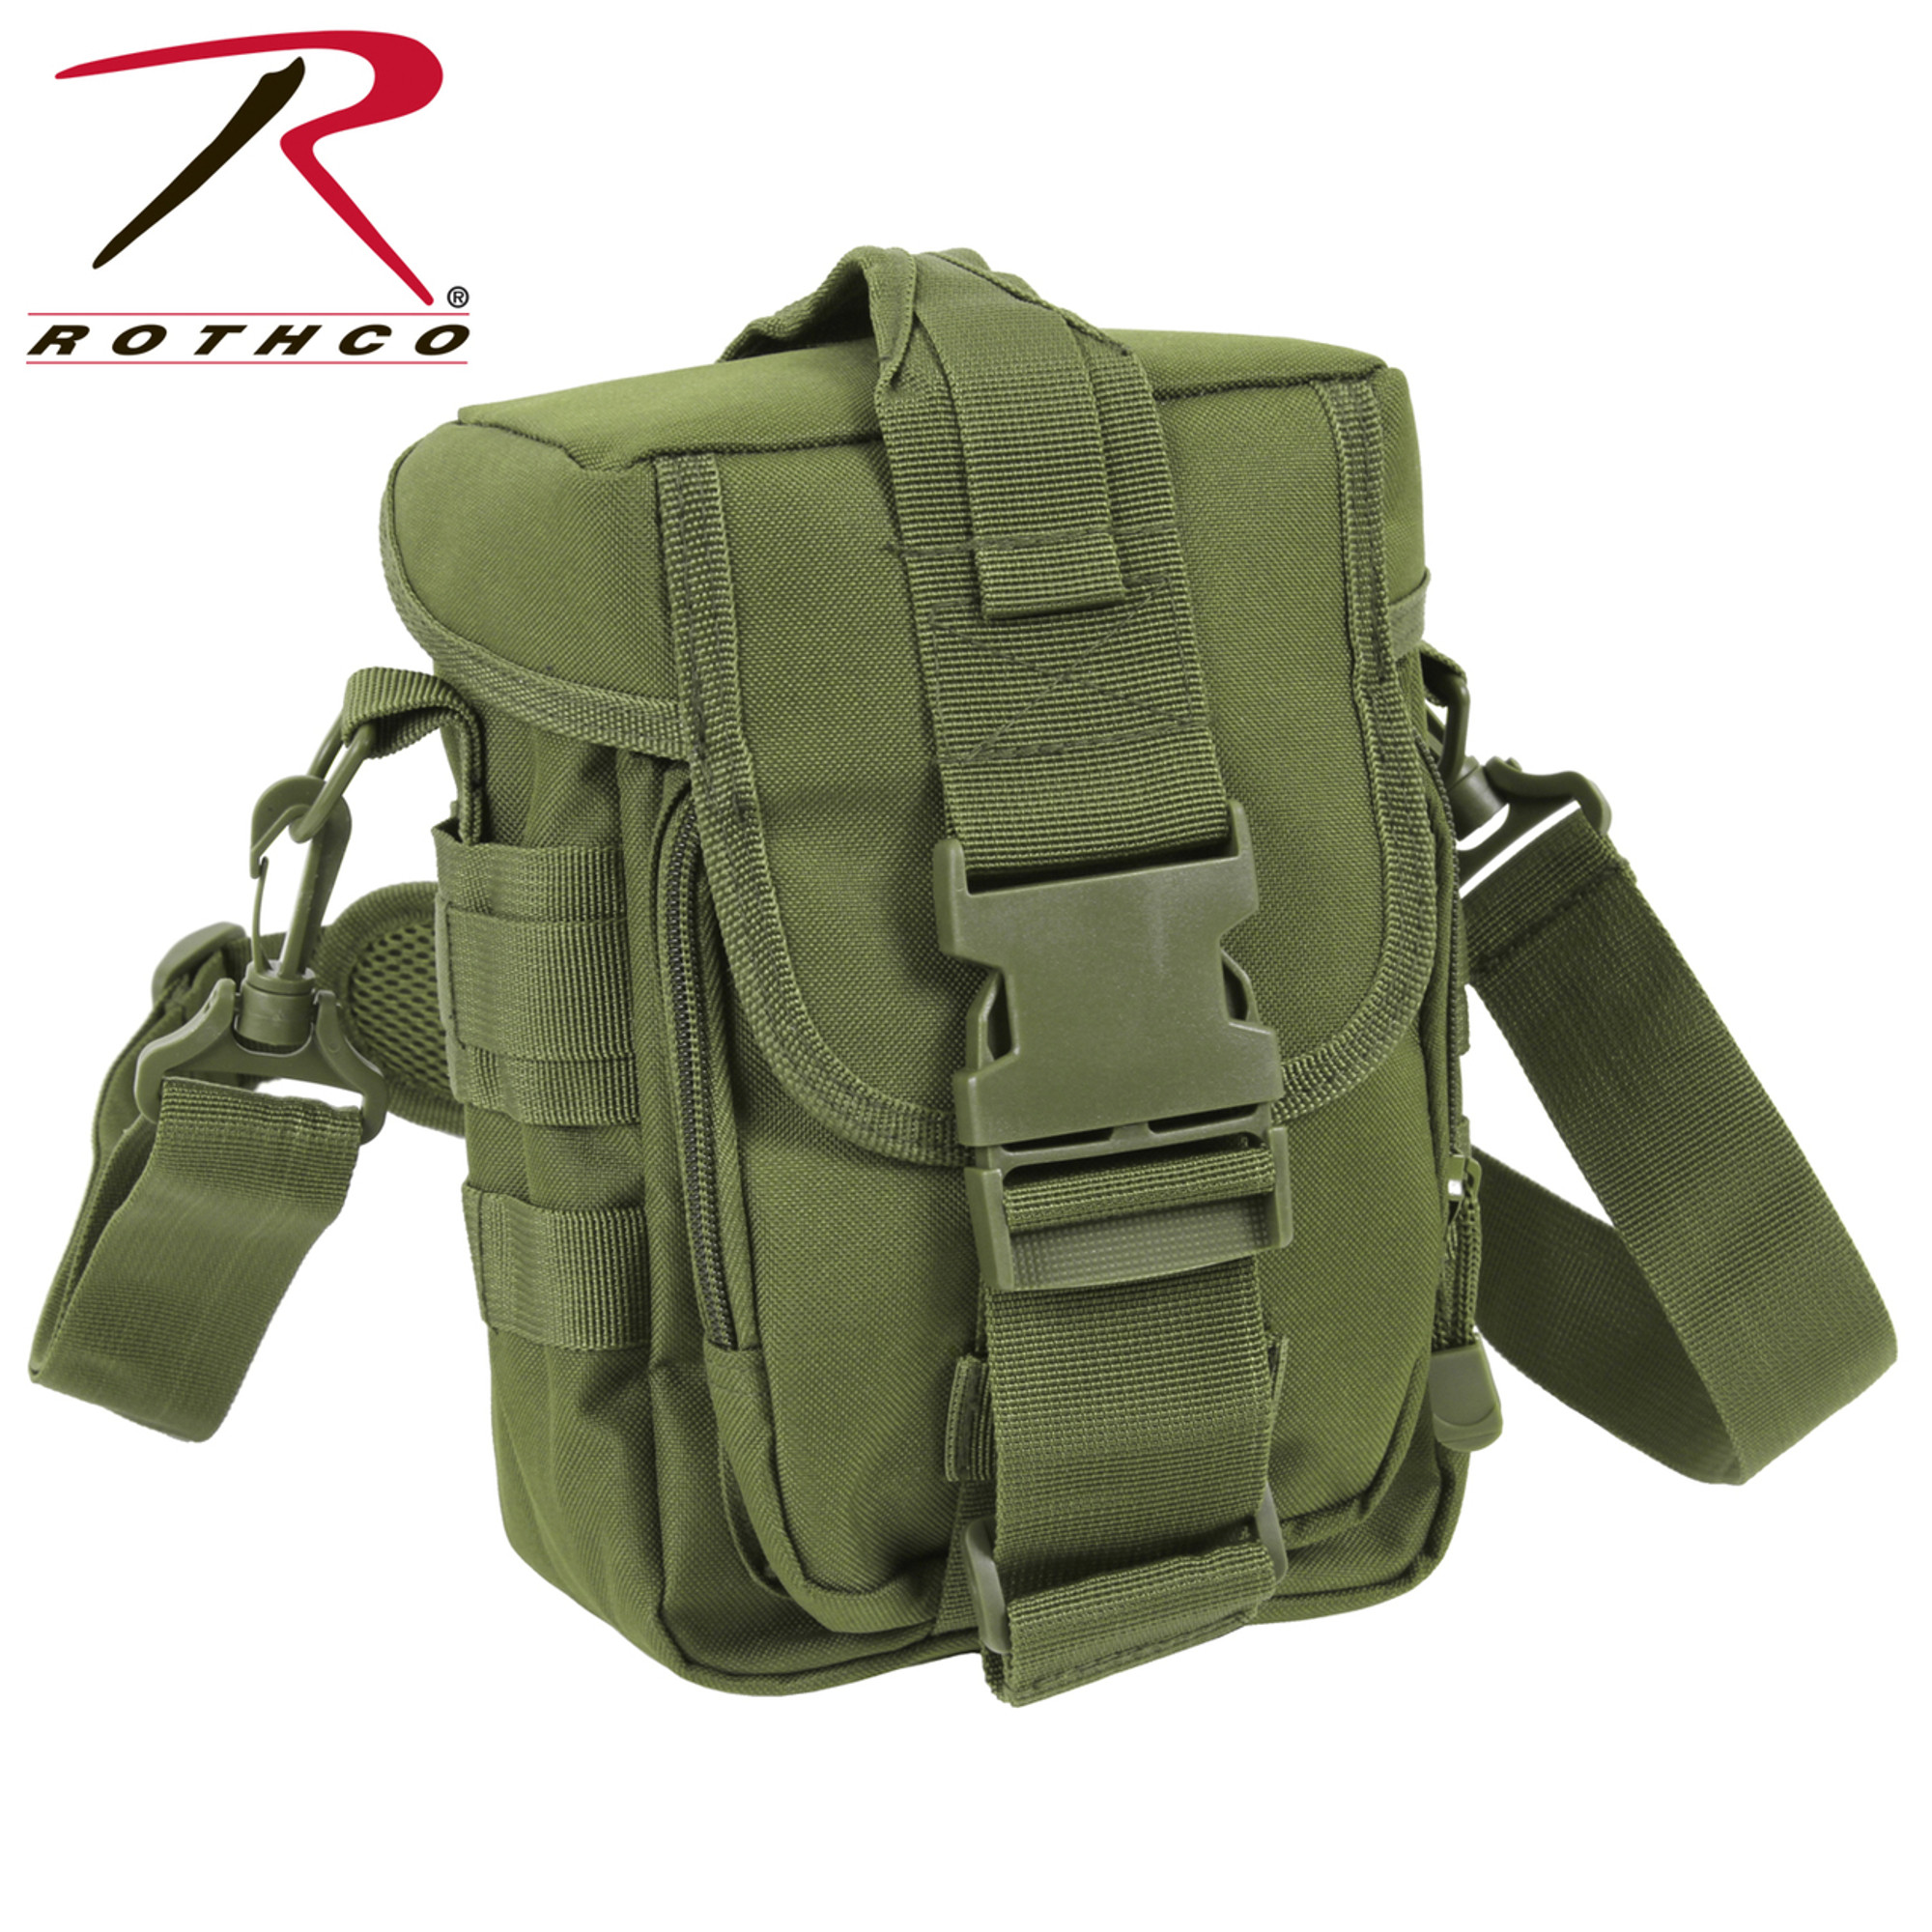 Rothco Flexipack MOLLE Tactical Shoulder Bag - Olive Drab